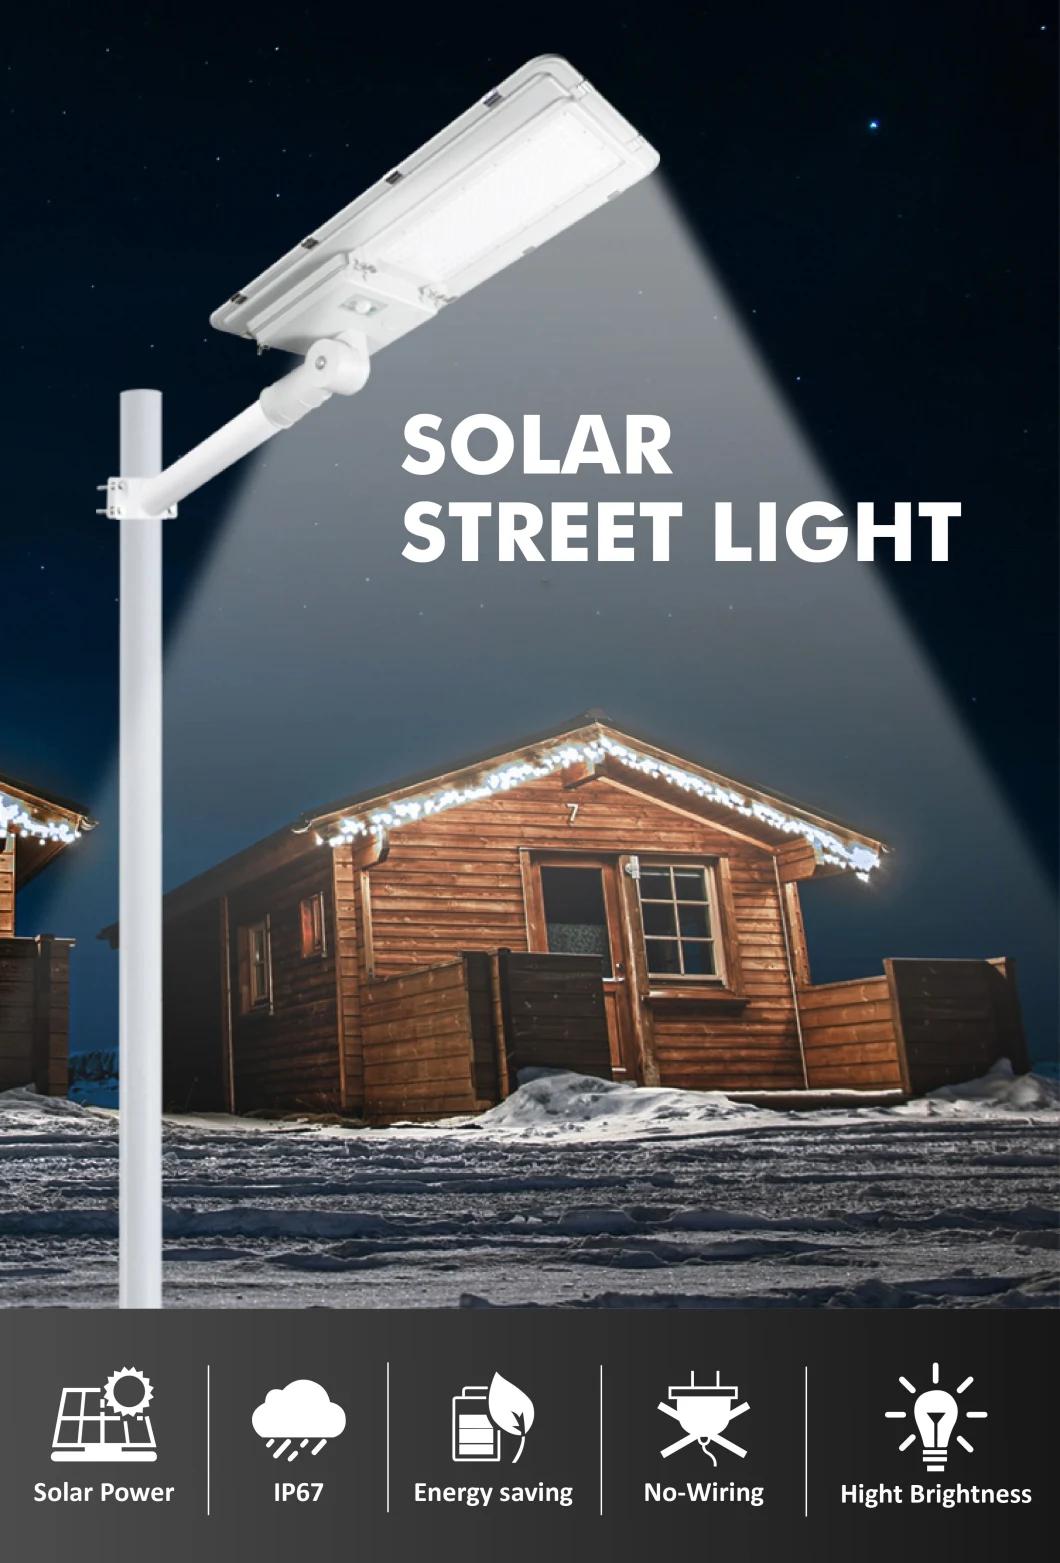 Hot Selling Solar LED Street Light Die-Casting Aluminum Die Casting Housing LED Lamp Smart Control Outdoor Lighting